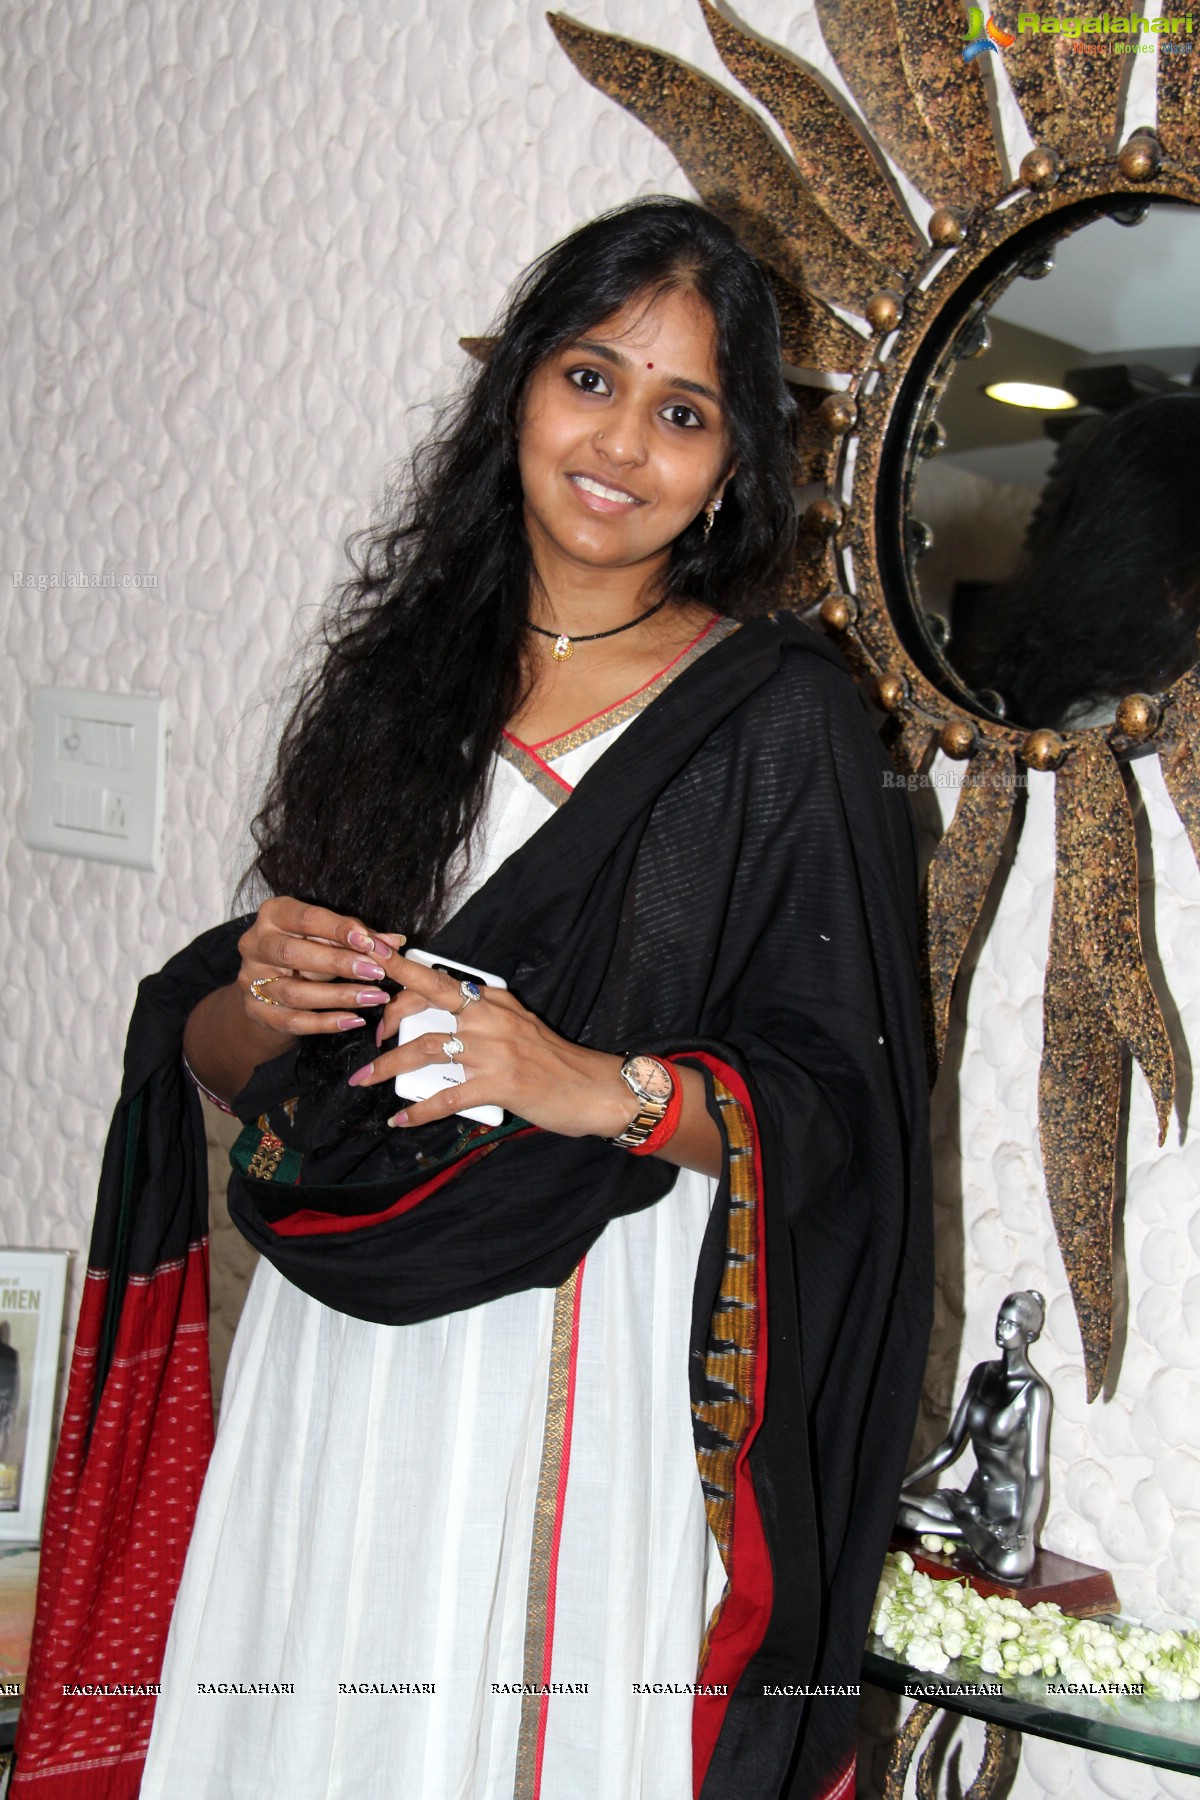 Kerastase Experience at Bubbles Hair & Beauty Salon, Hyderabad